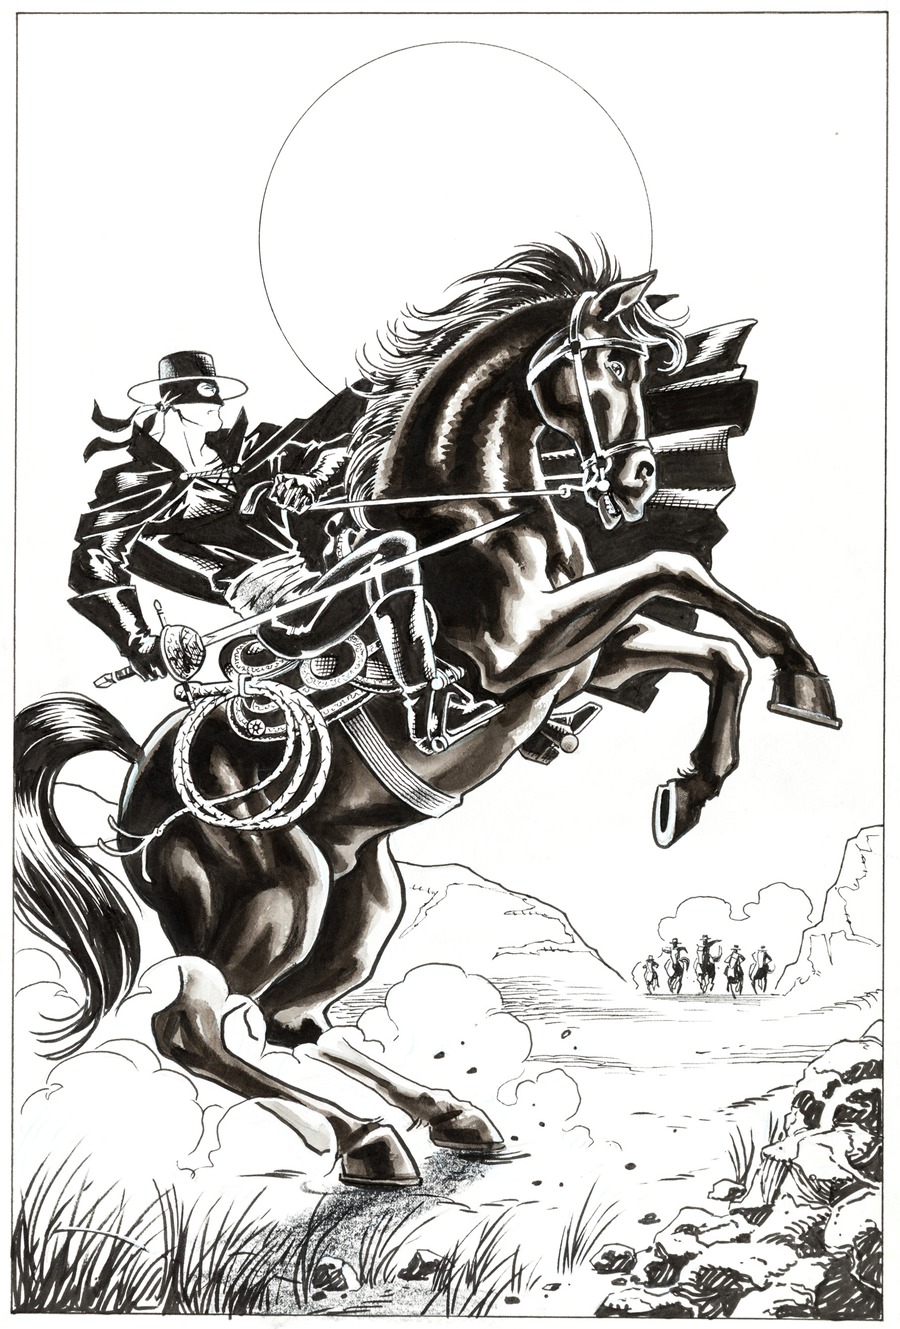 zorro horse drawing